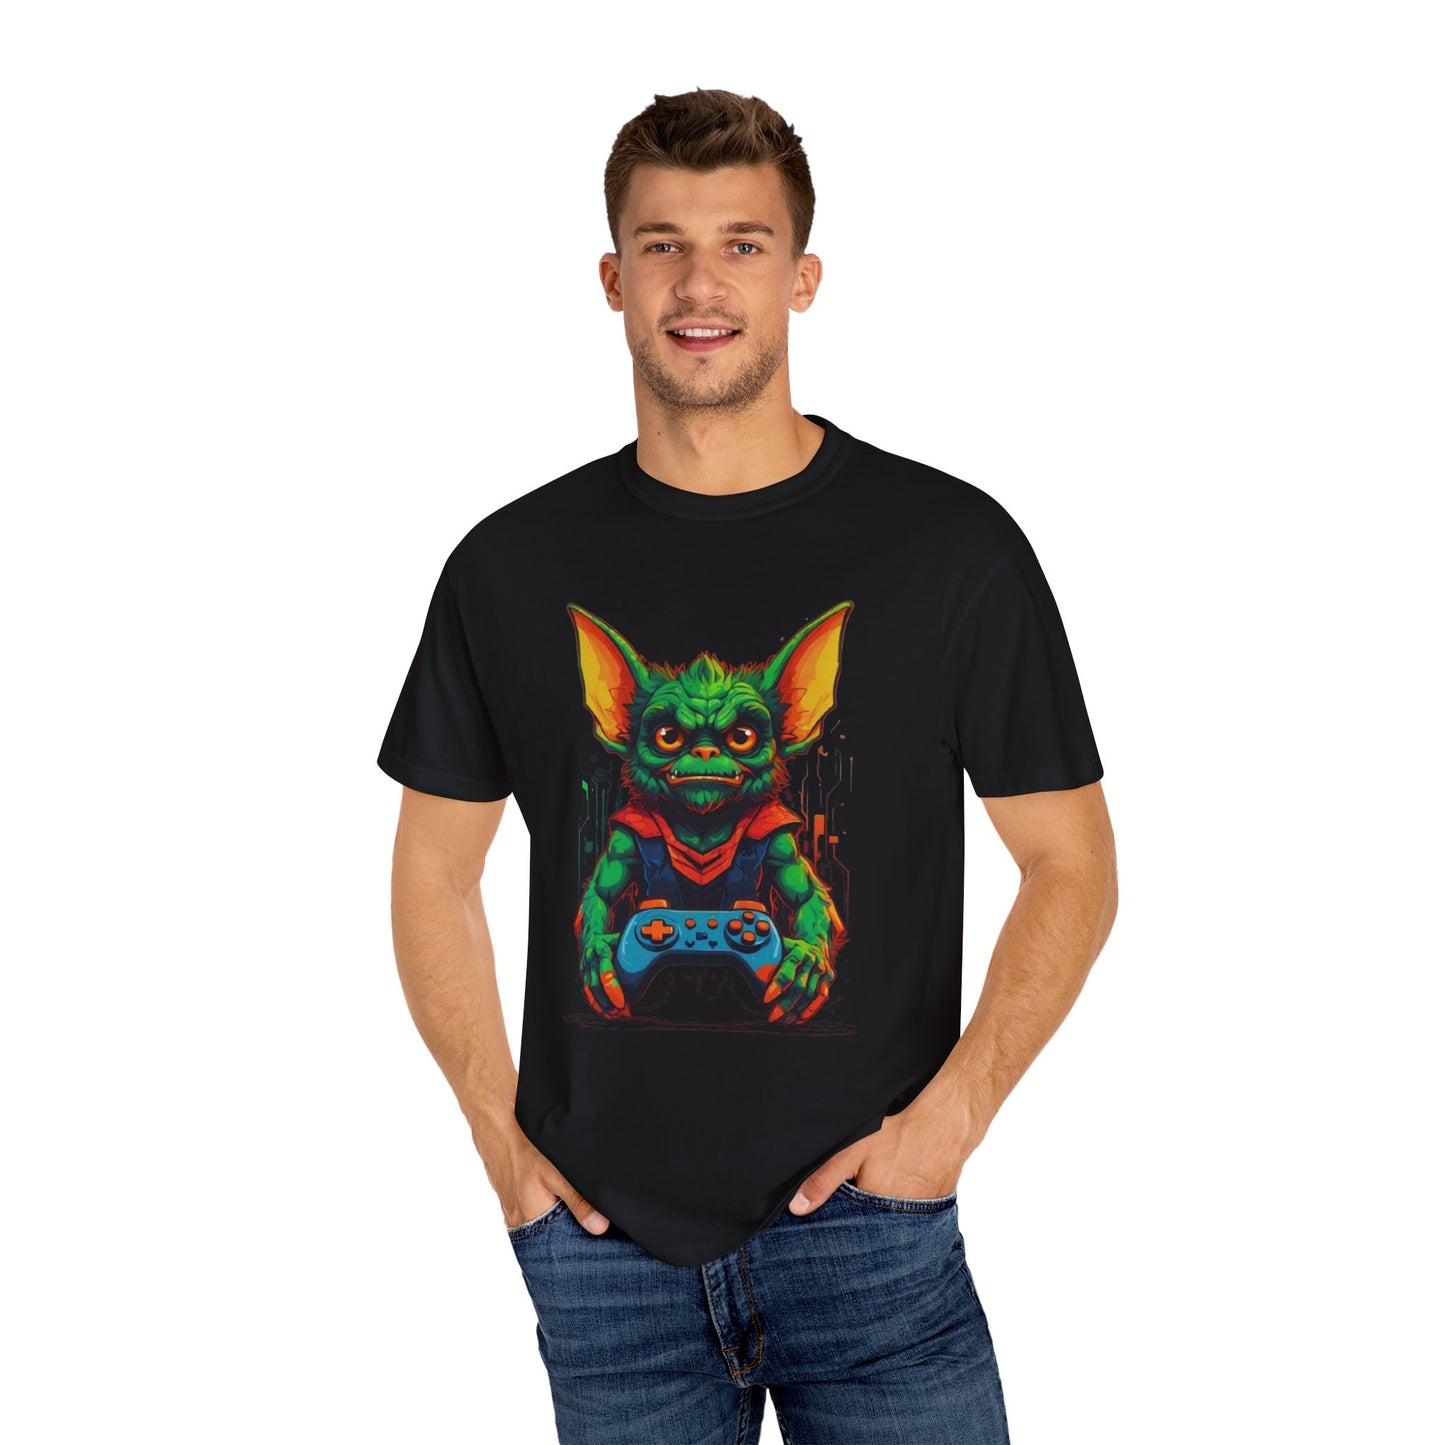 Gremlin on the Go - Unisex Garment-Dyed T-shirt